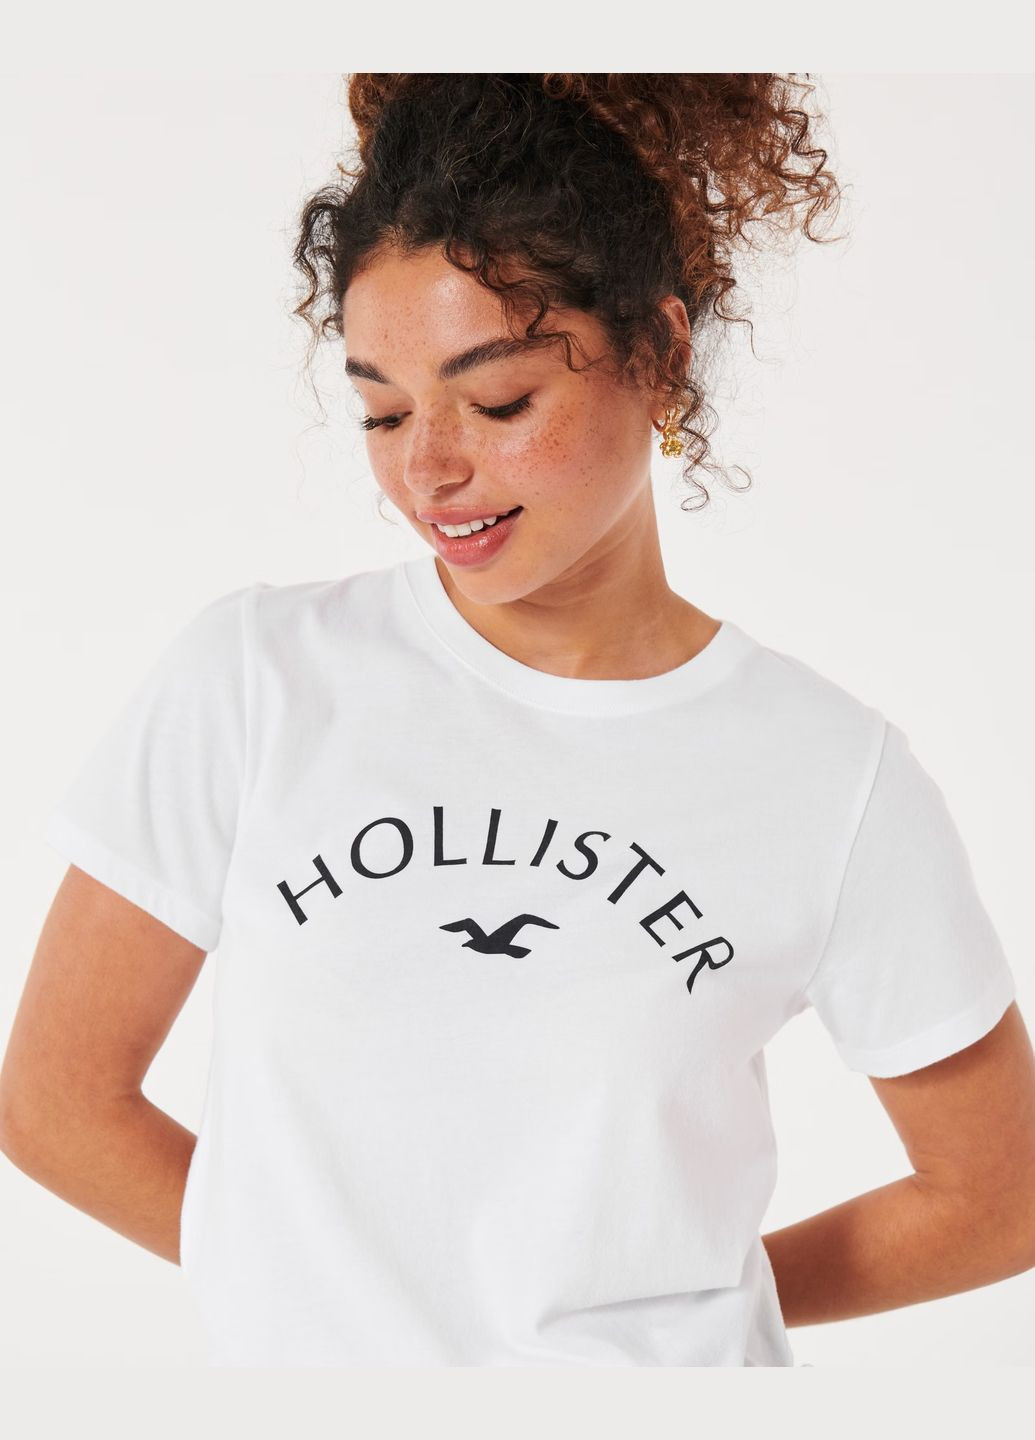 Белая летняя футболка hc9824w Hollister